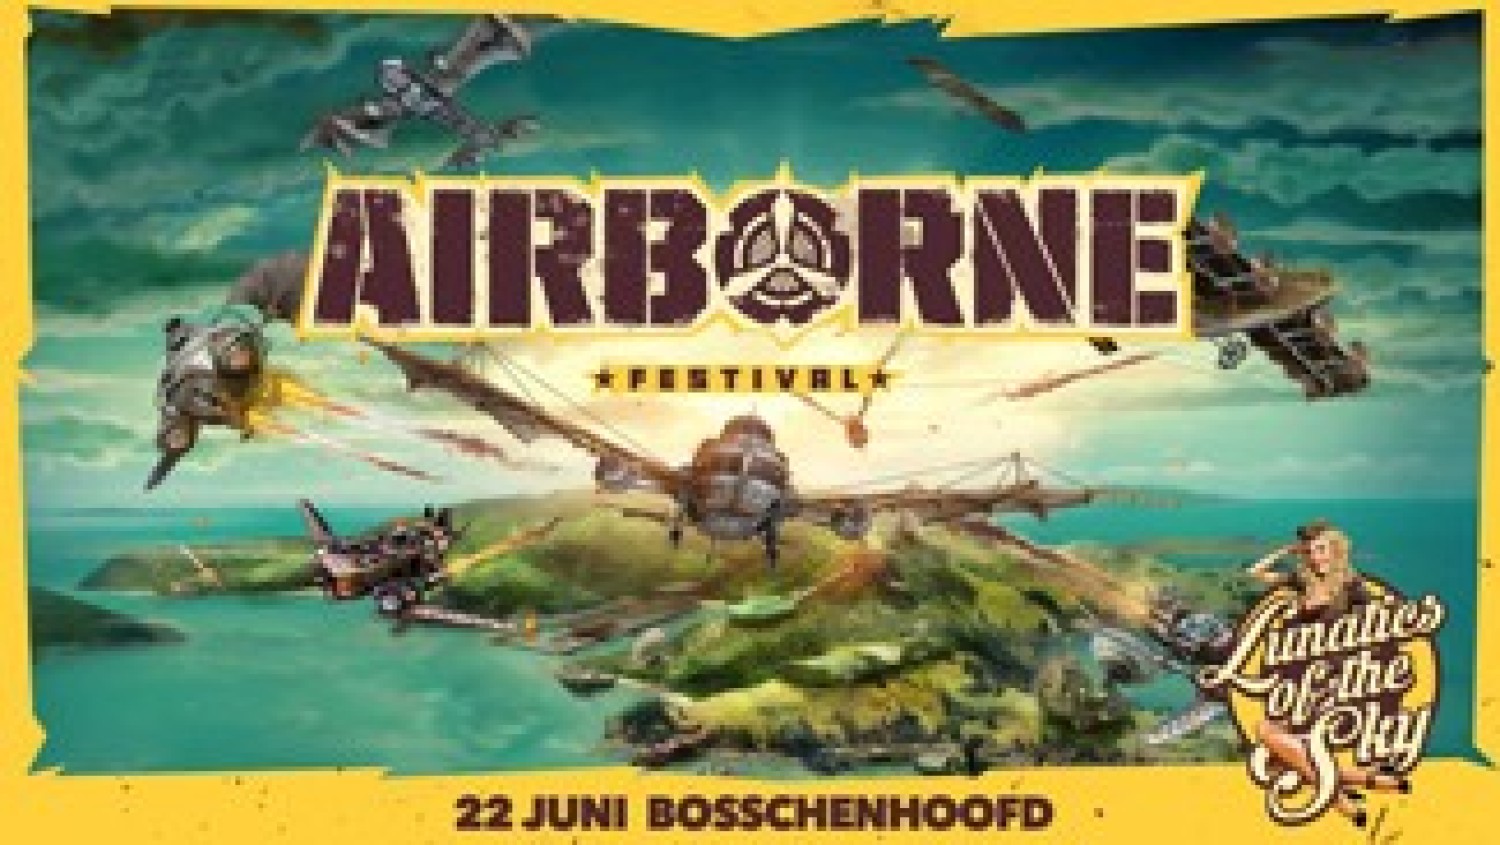 Party report: Airborne Festival 2019, Bosschenhoofd (22-06-2019)